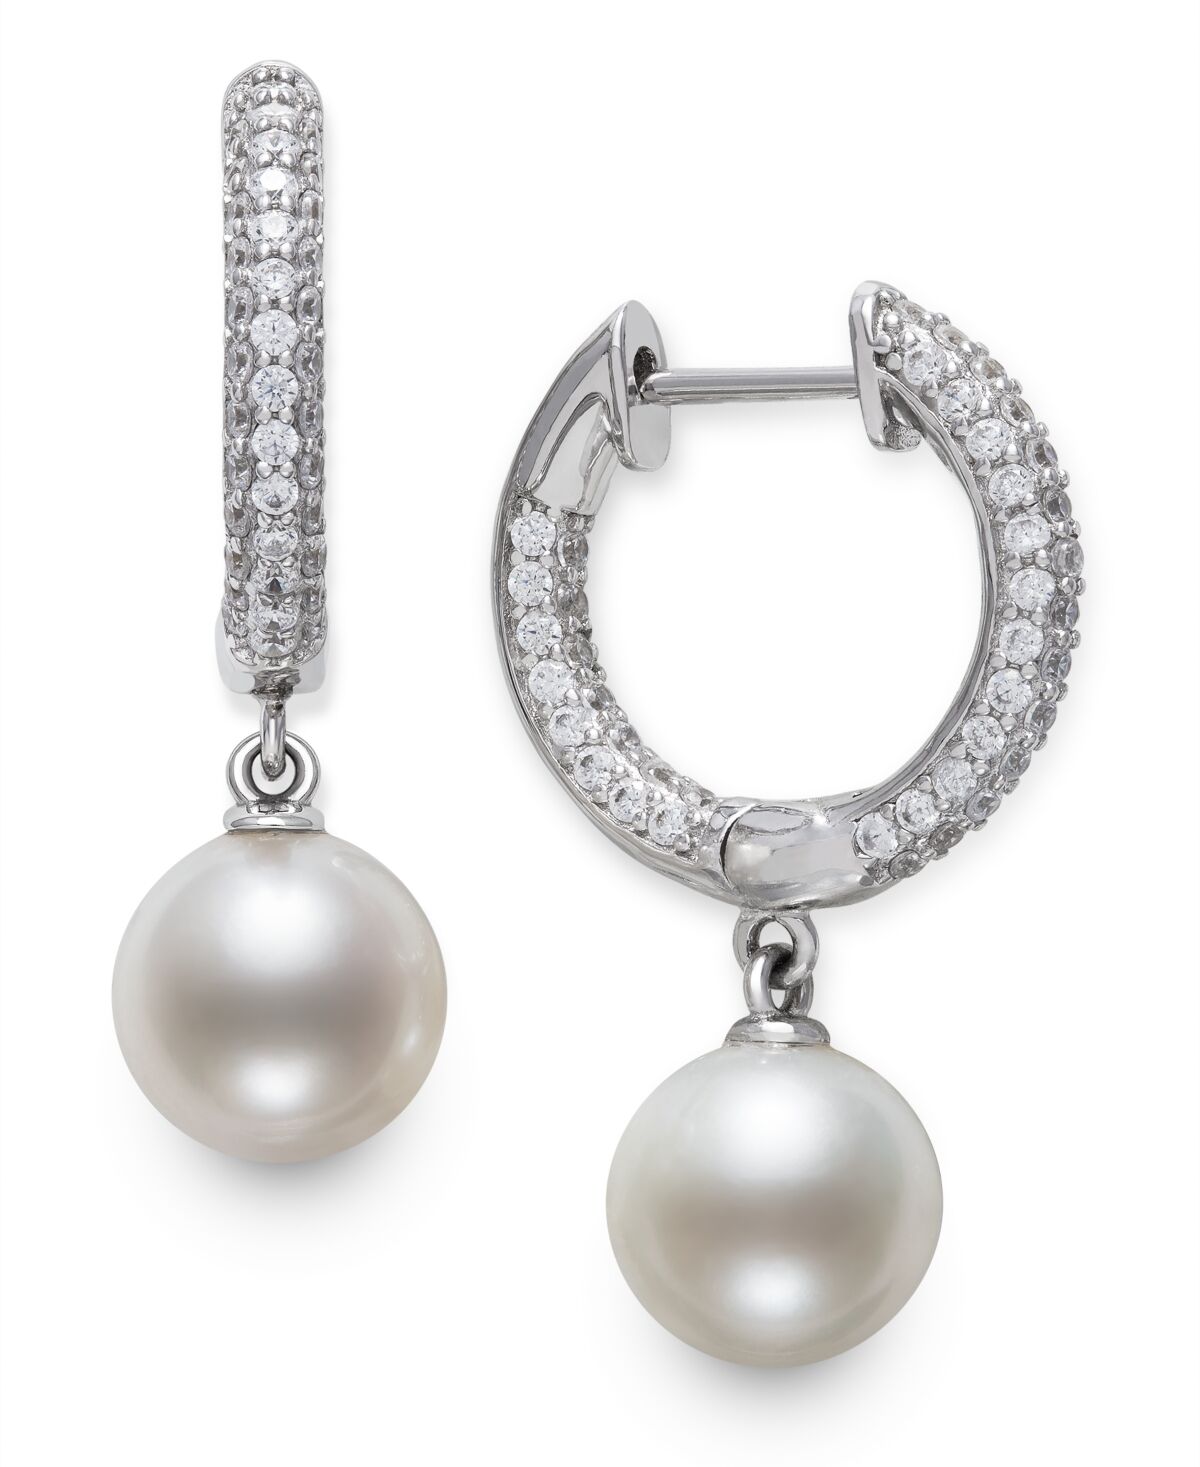 Belle de Mer Cultured Freshwater Pearl (7mm) & Cubic Zirconia Dangle Huggie Hoop Earrings in Sterling Silver, Created for Macy's - Sterling Silver